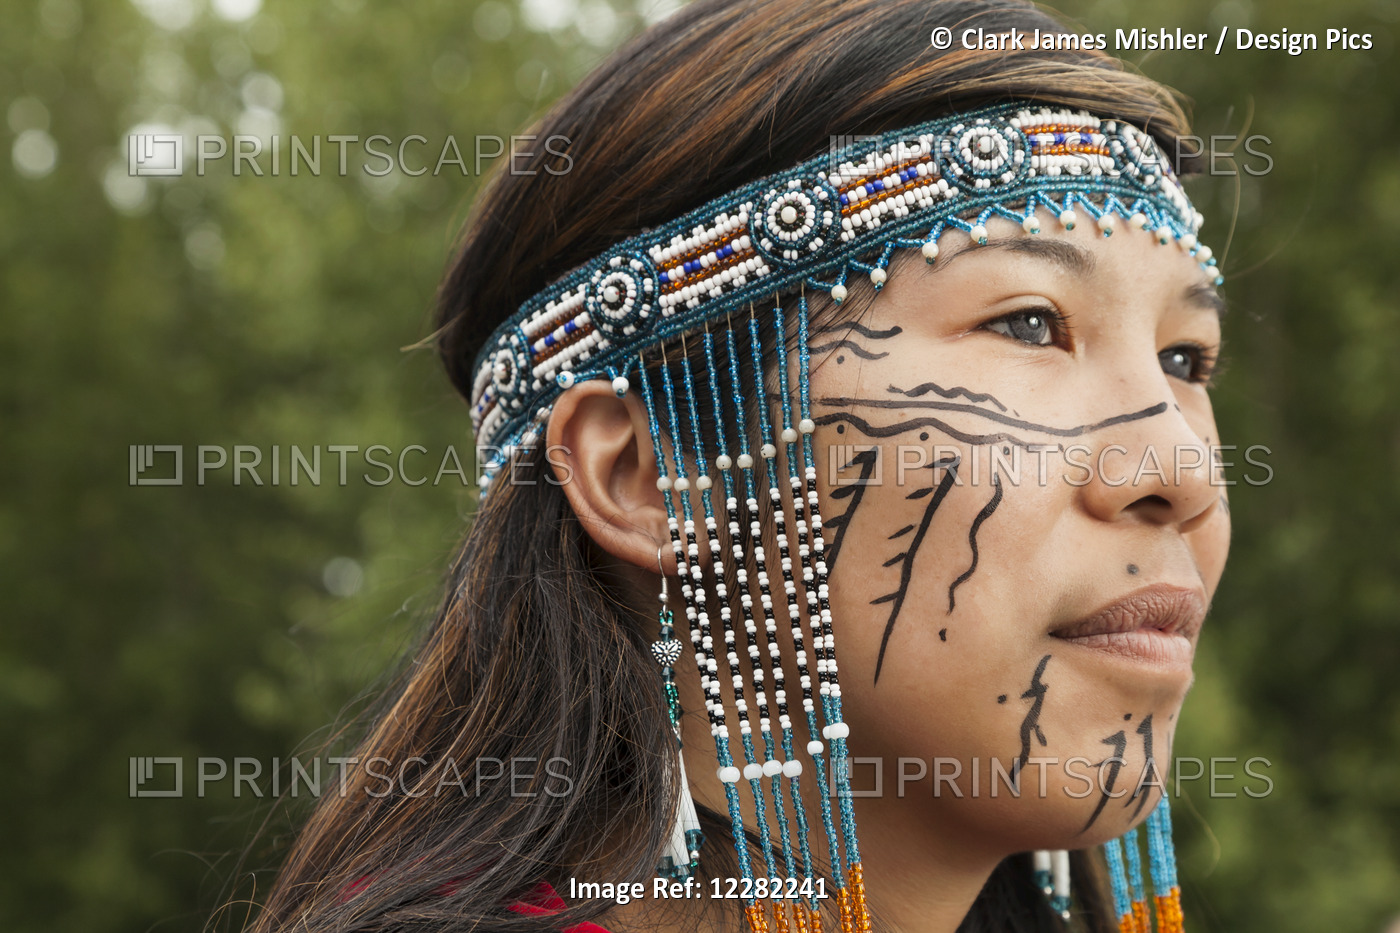 Portrait Of A Female Alaskan Native With Traditional Regalia, Alaska